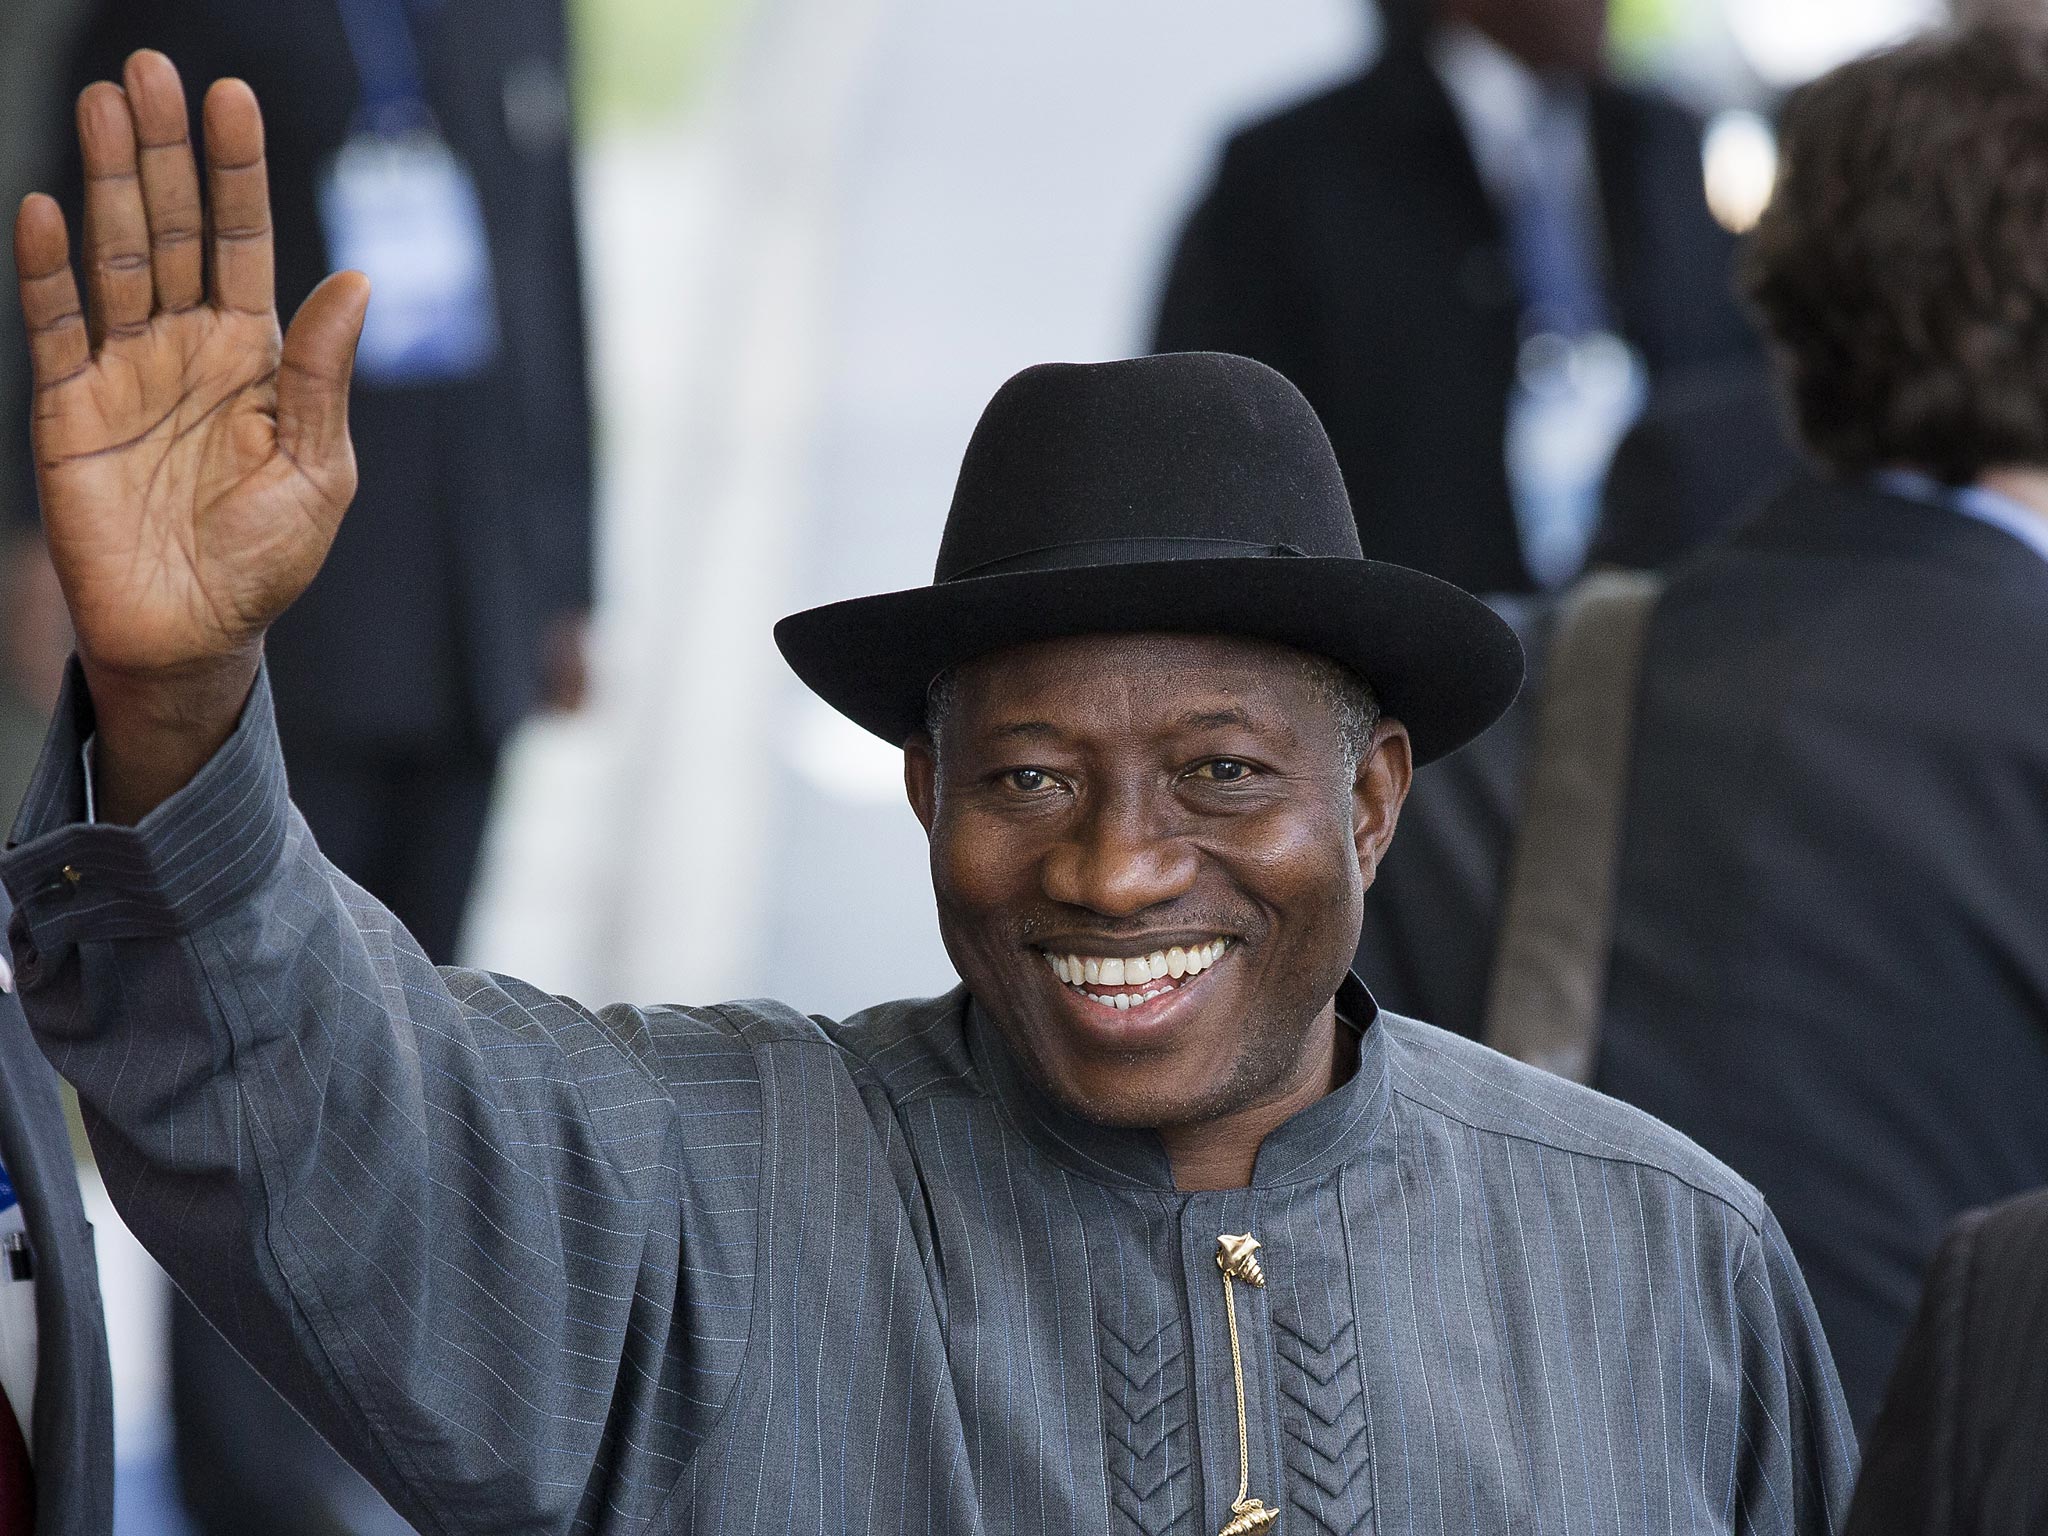 President Goodluck Jonathan has said he will not exchange prisoners for missing girls